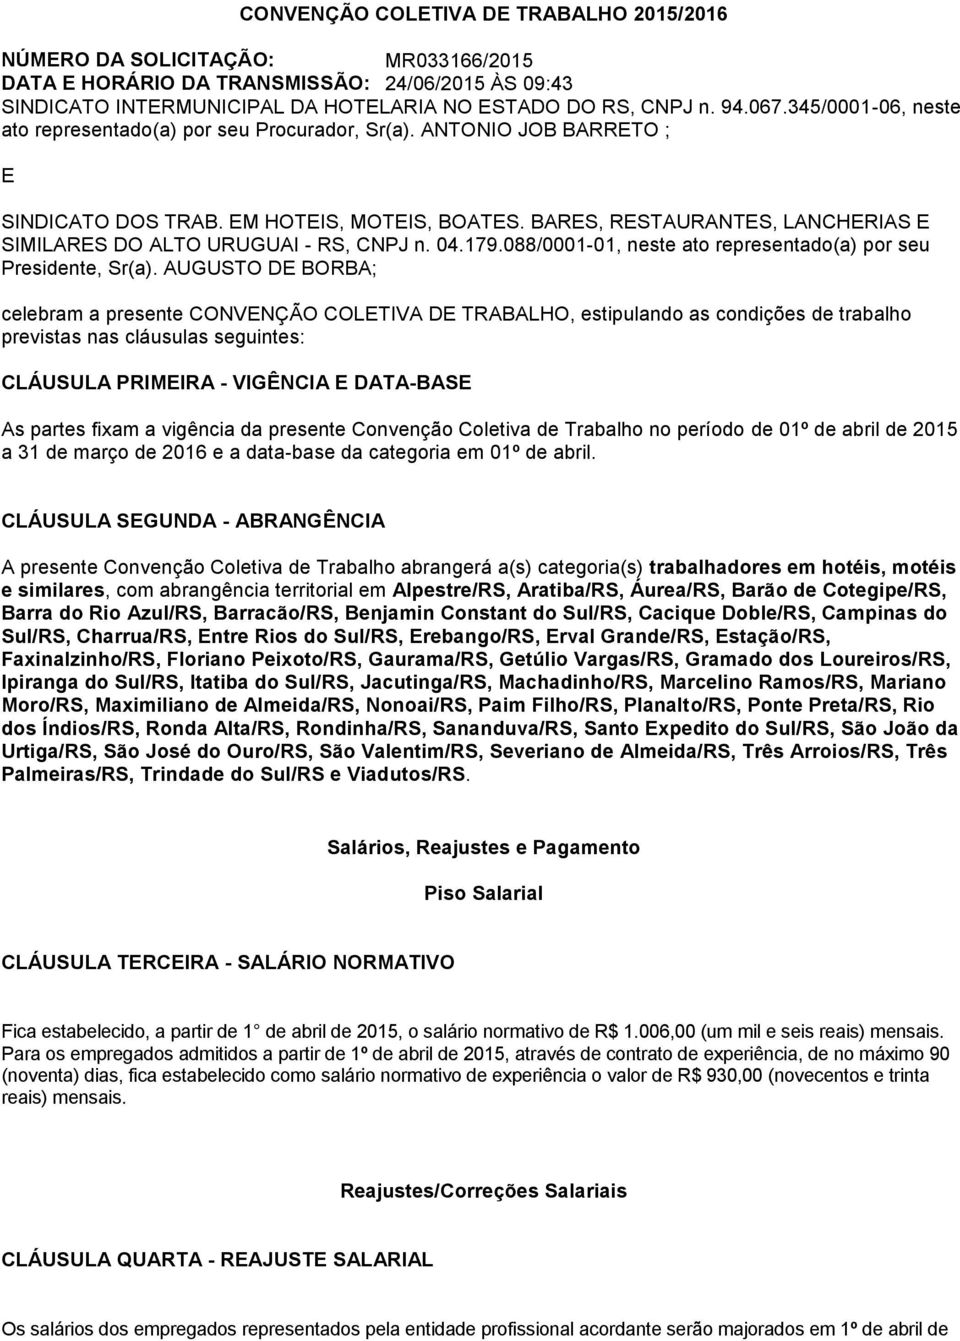 BARES, RESTAURANTES, LANCHERIAS E SIMILARES DO ALTO URUGUAI - RS, CNPJ n. 04.179.088/0001-01, neste ato representado(a) por seu Presidente, Sr(a).